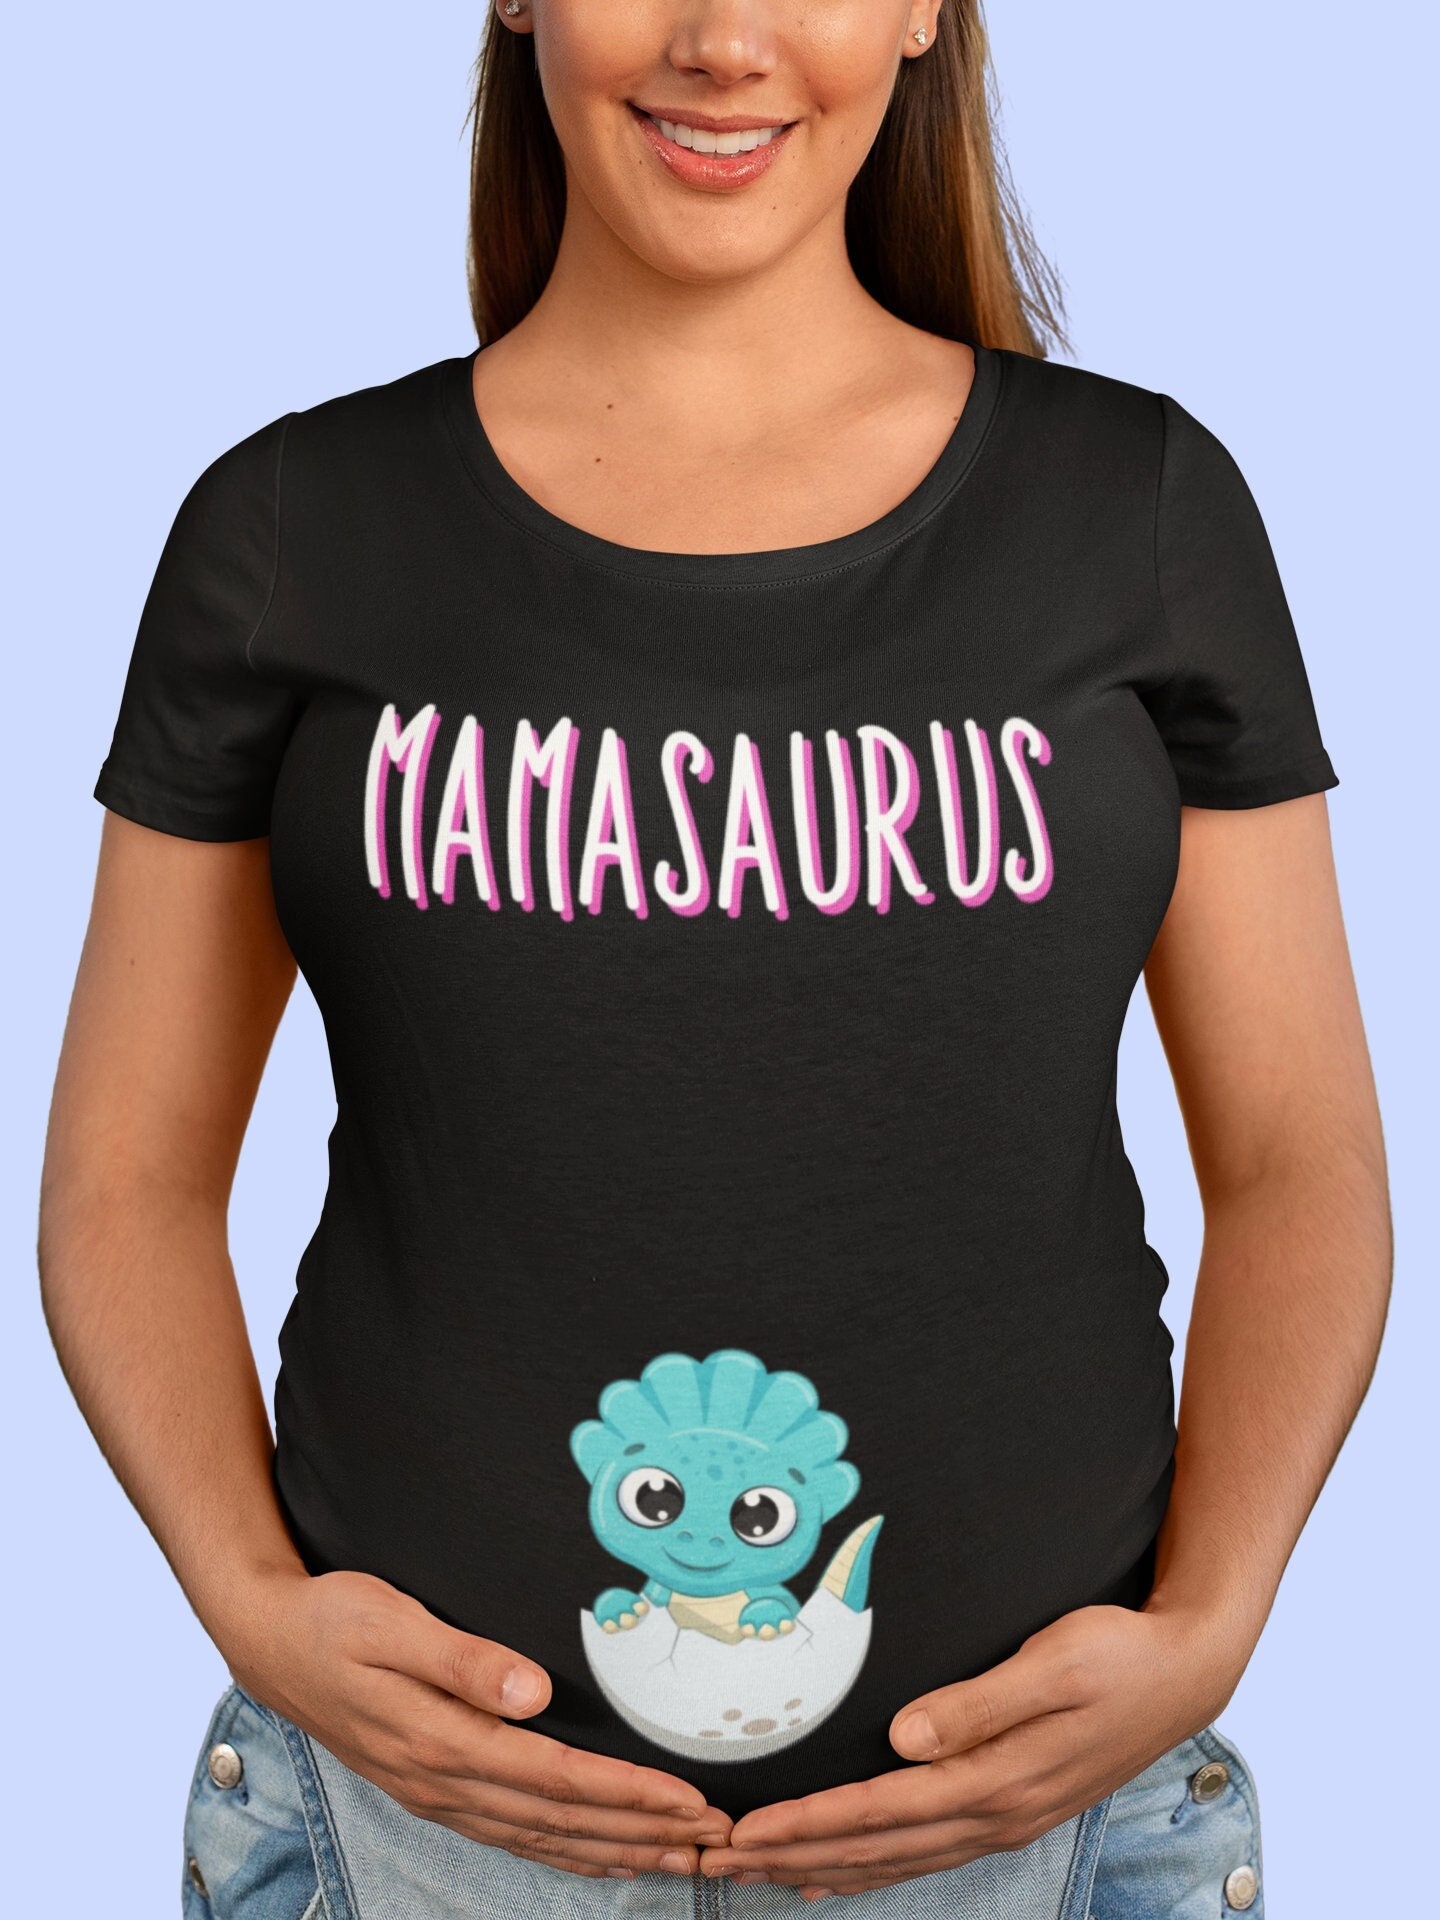 Schwangerschaft Shirt, Mamasaurus Mutterschaft Stil Schwangerschaftansage, Lustiges Schwangere Frau Neues Baby Geschenk von DigitalPrintApparel